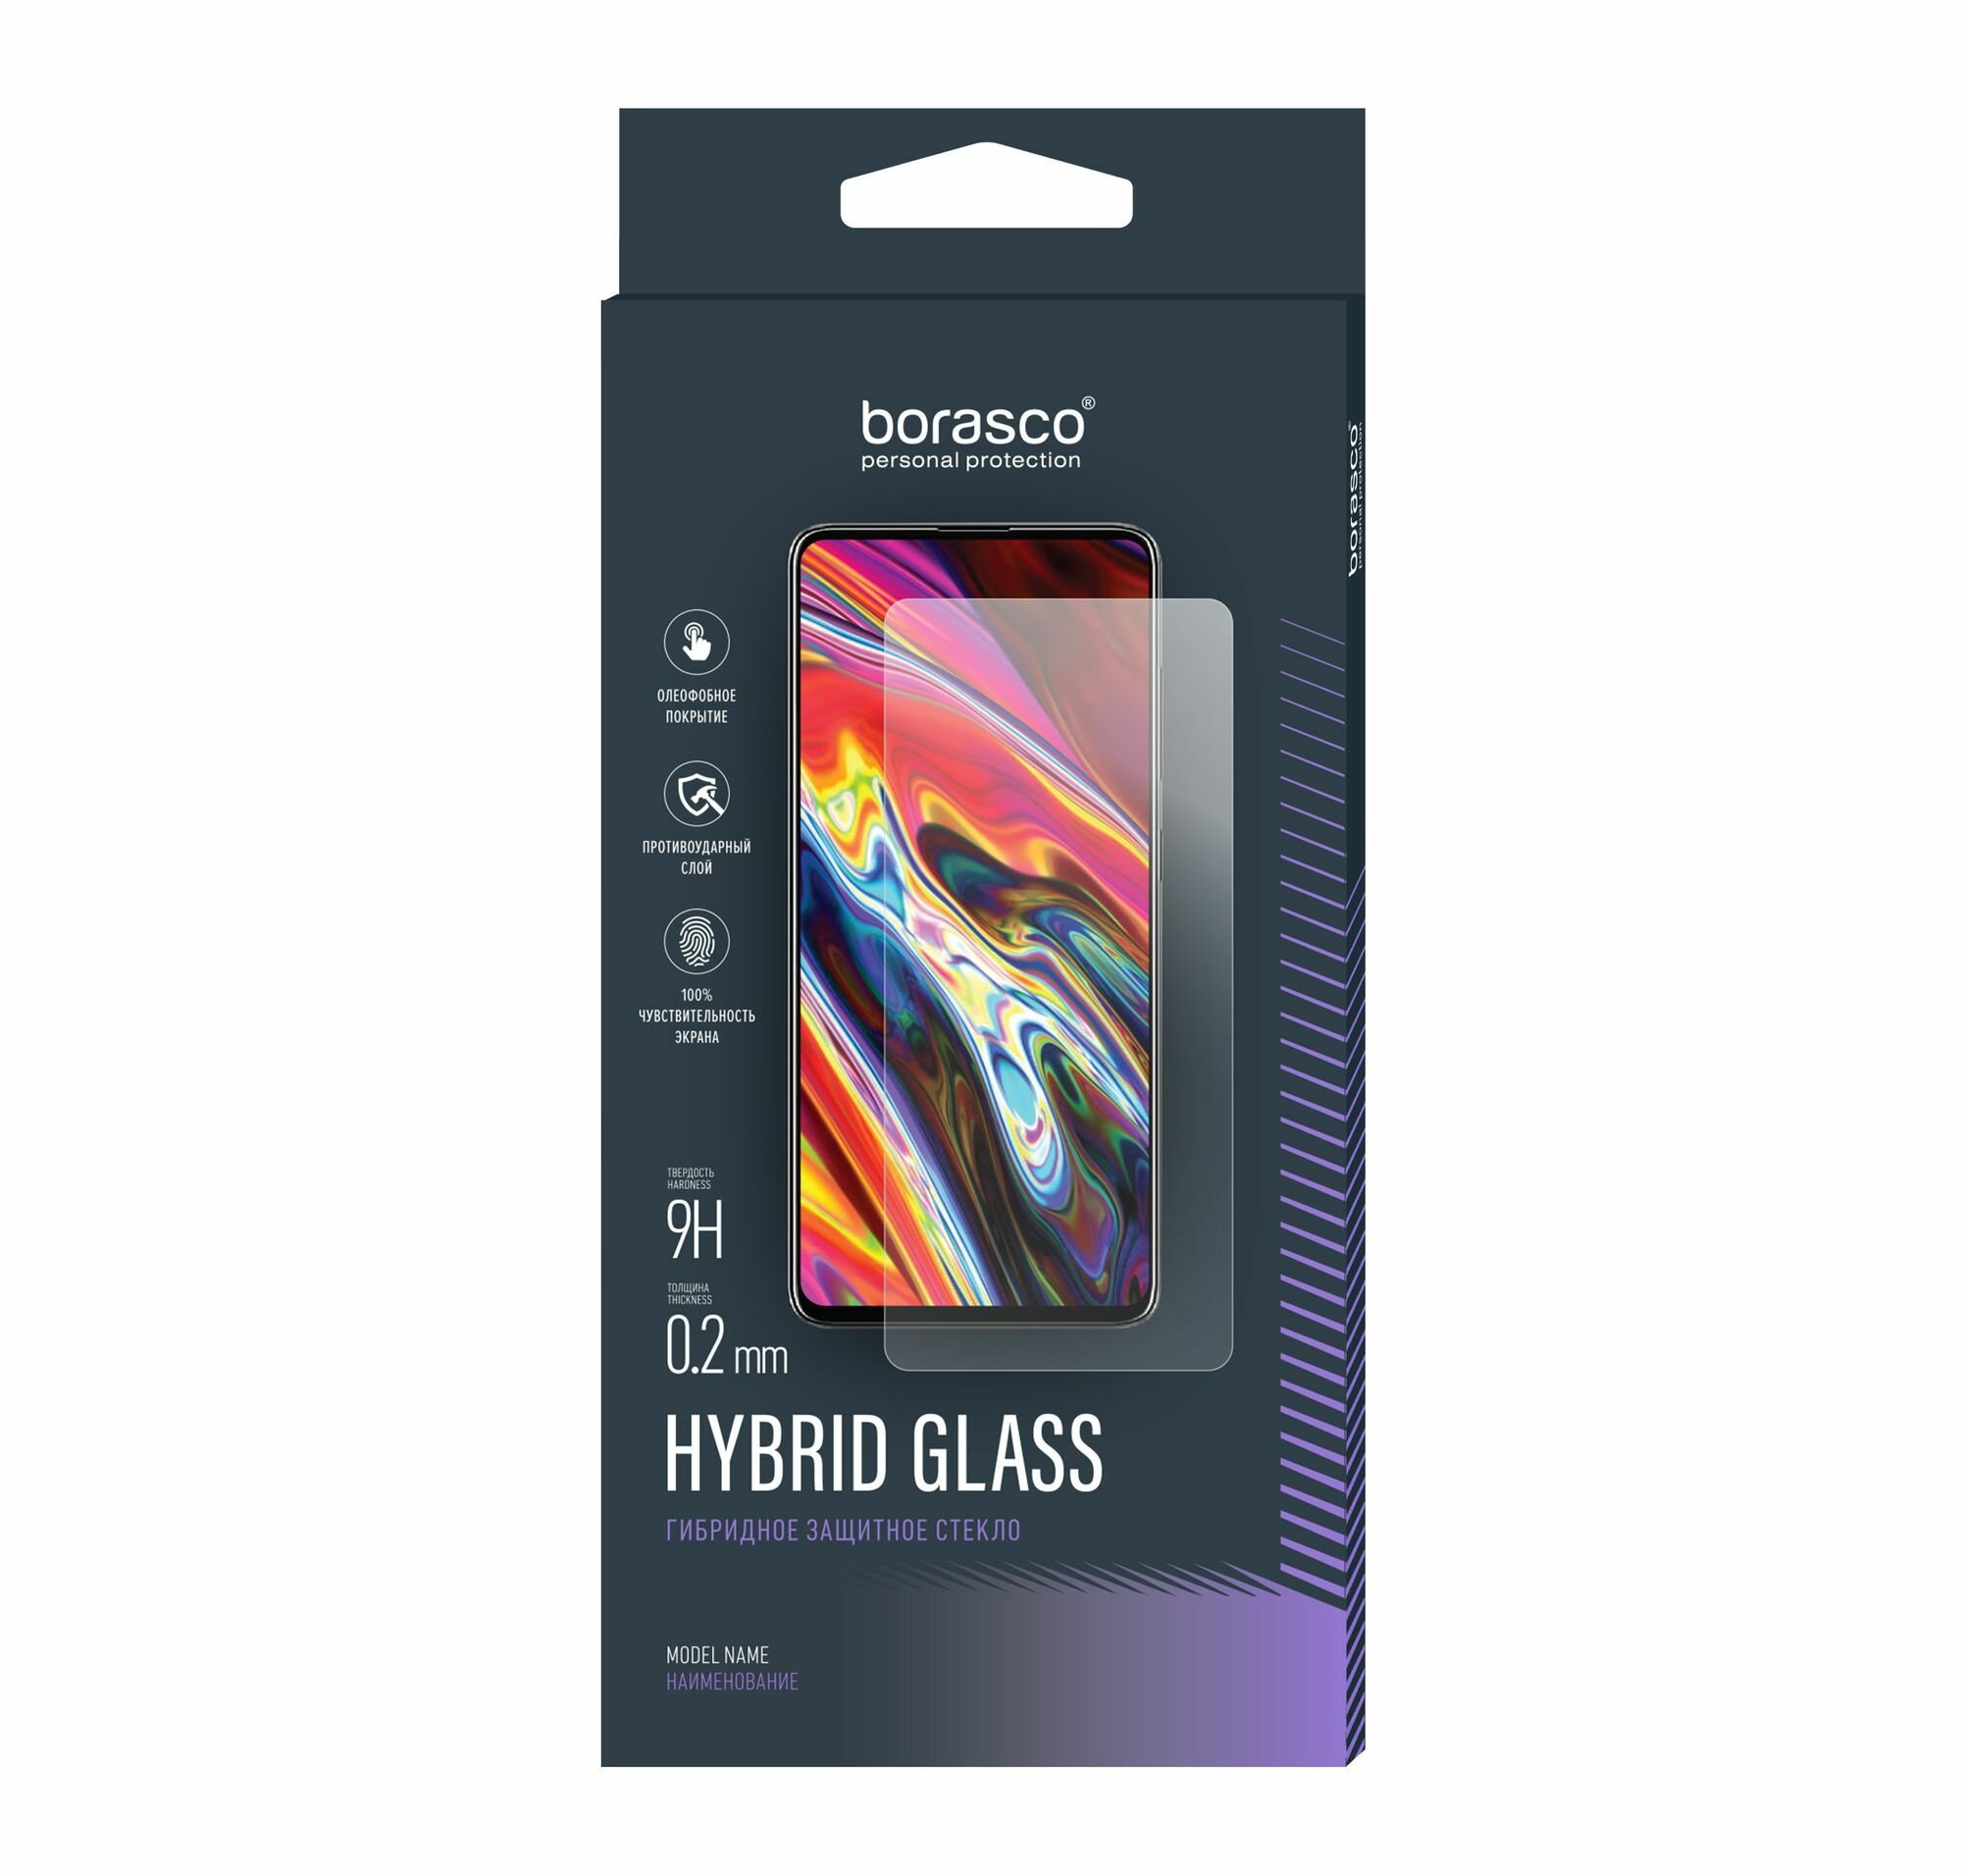 Стекло защитное Hybrid Glass VSP 026 мм для Alcatel Pixi 4 (5") 5010D